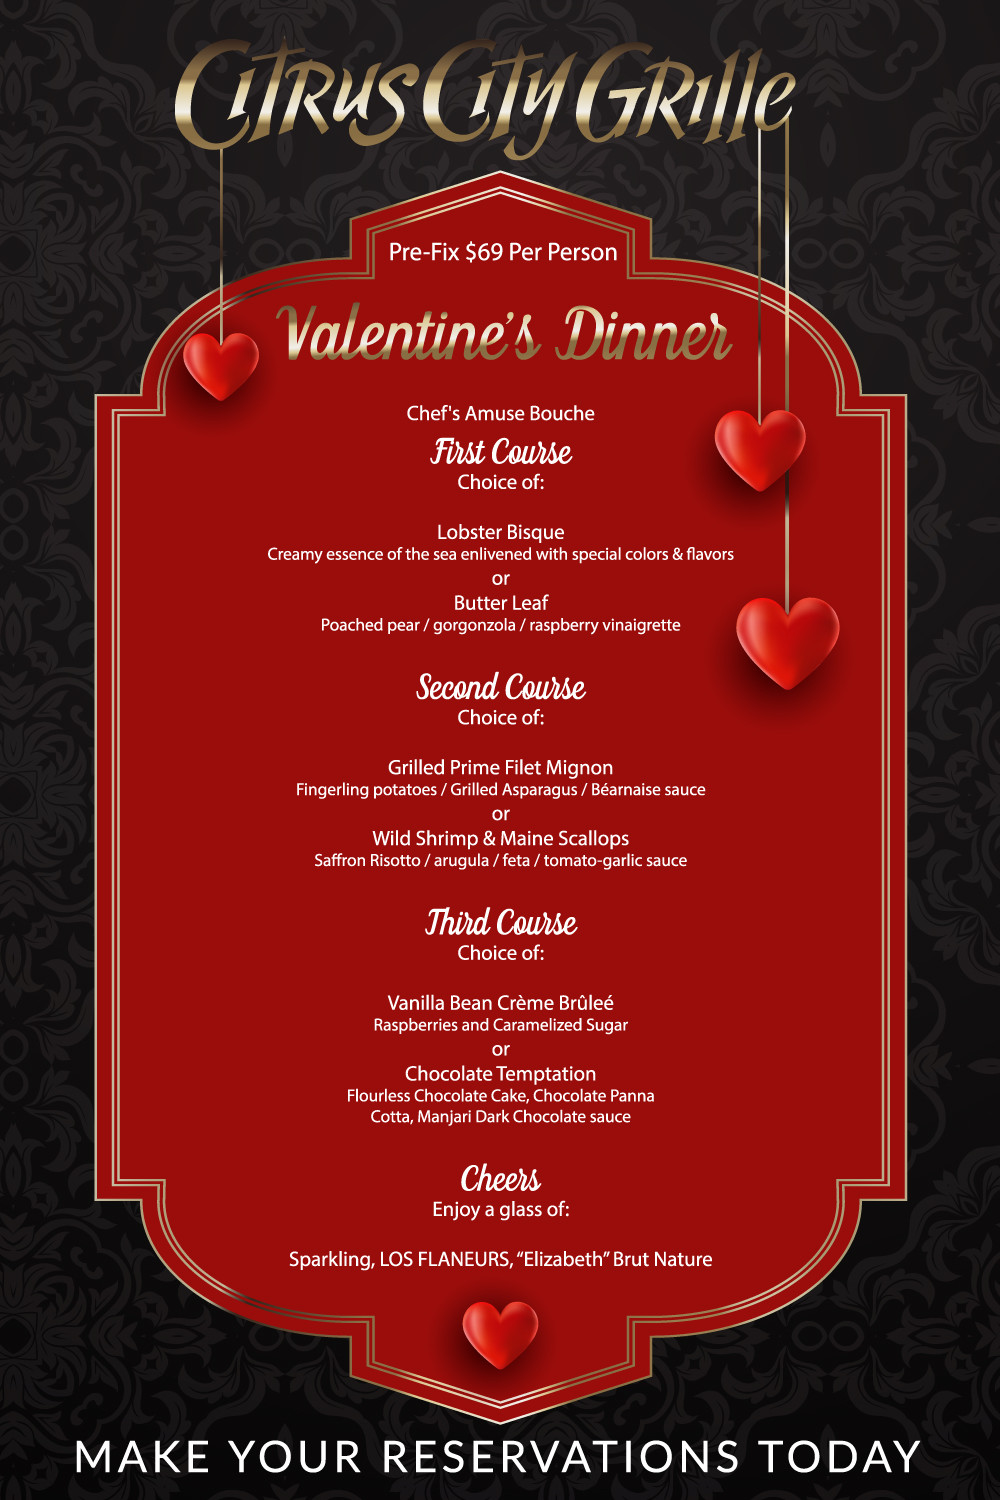 Valentines Day Dinner Restaurant
 Valentine’s Day Dinner – Citrus City Grille